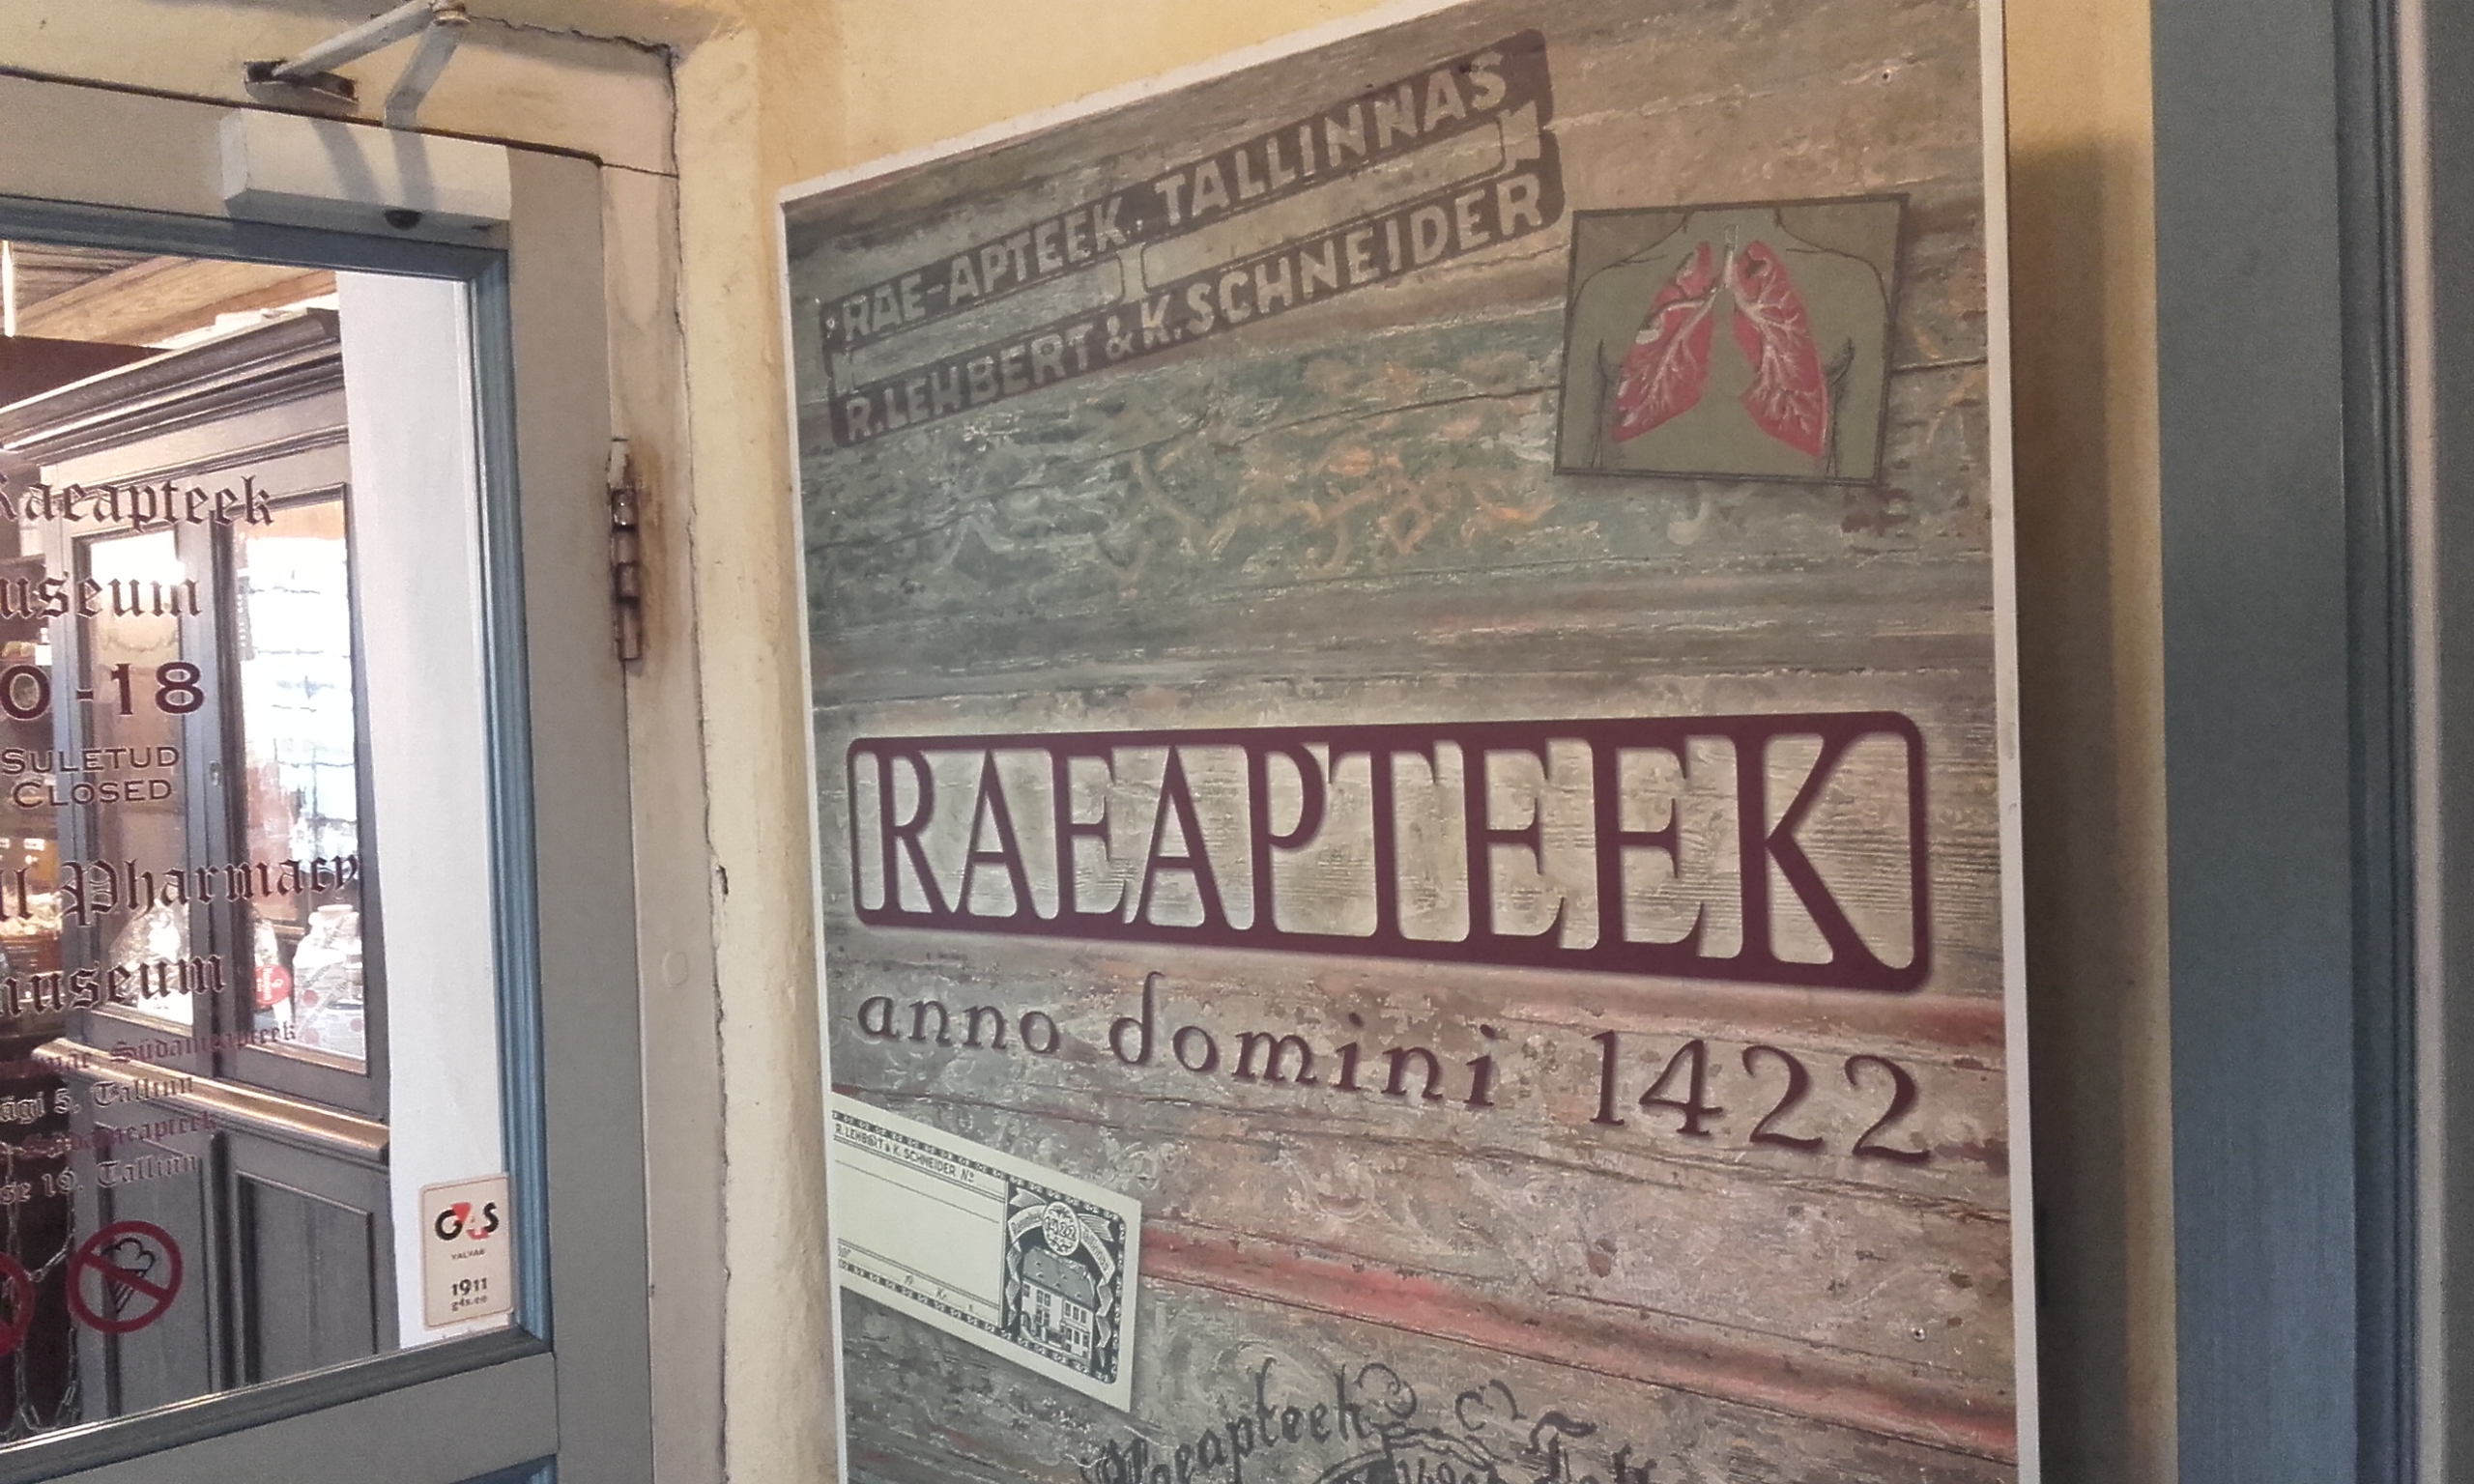 Raeapteek, la farmacia más antigua de Europa